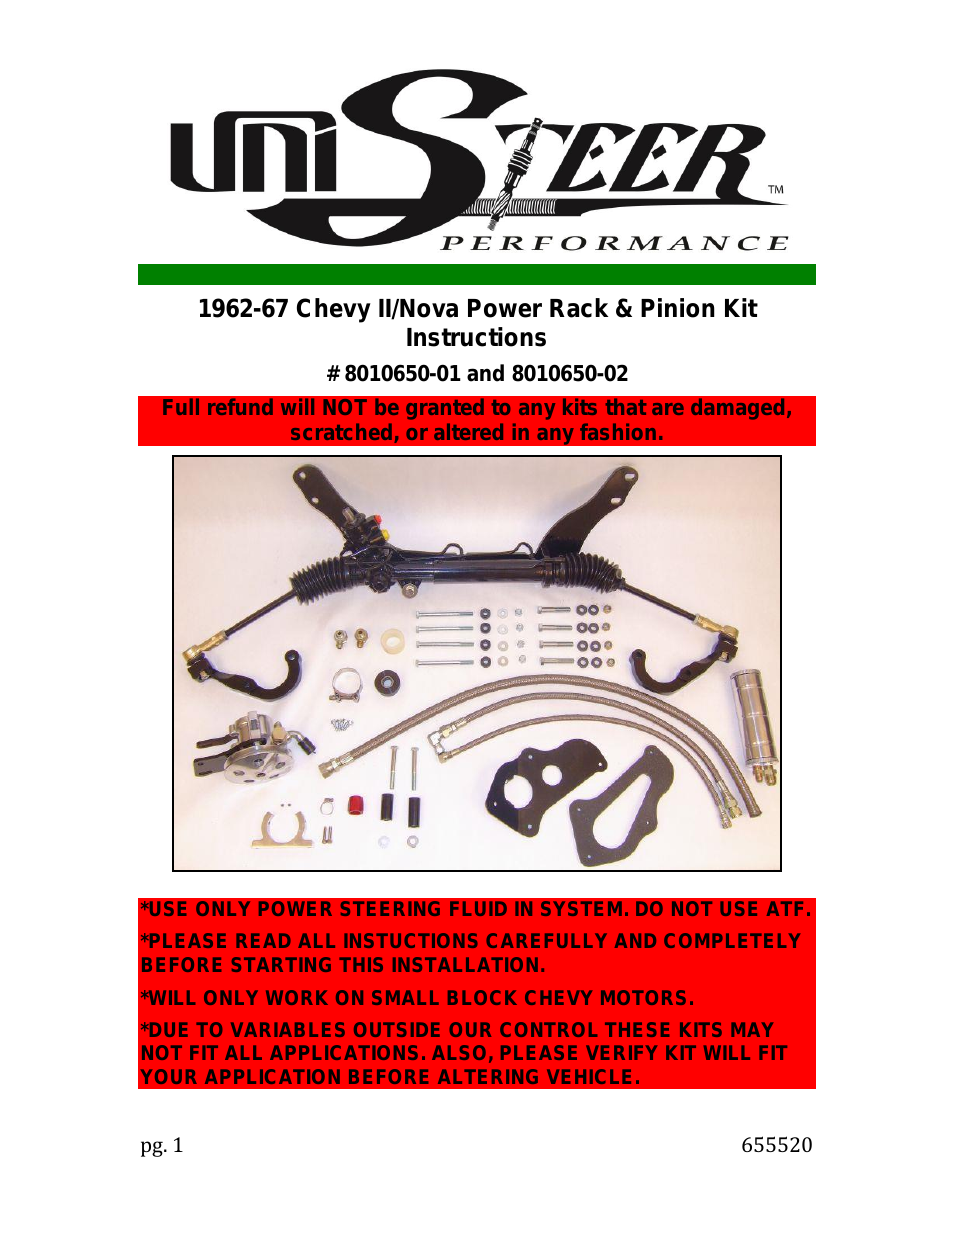 8010650-02  Chevy II/Nova Power Rack & Pinion Kit 1962-67